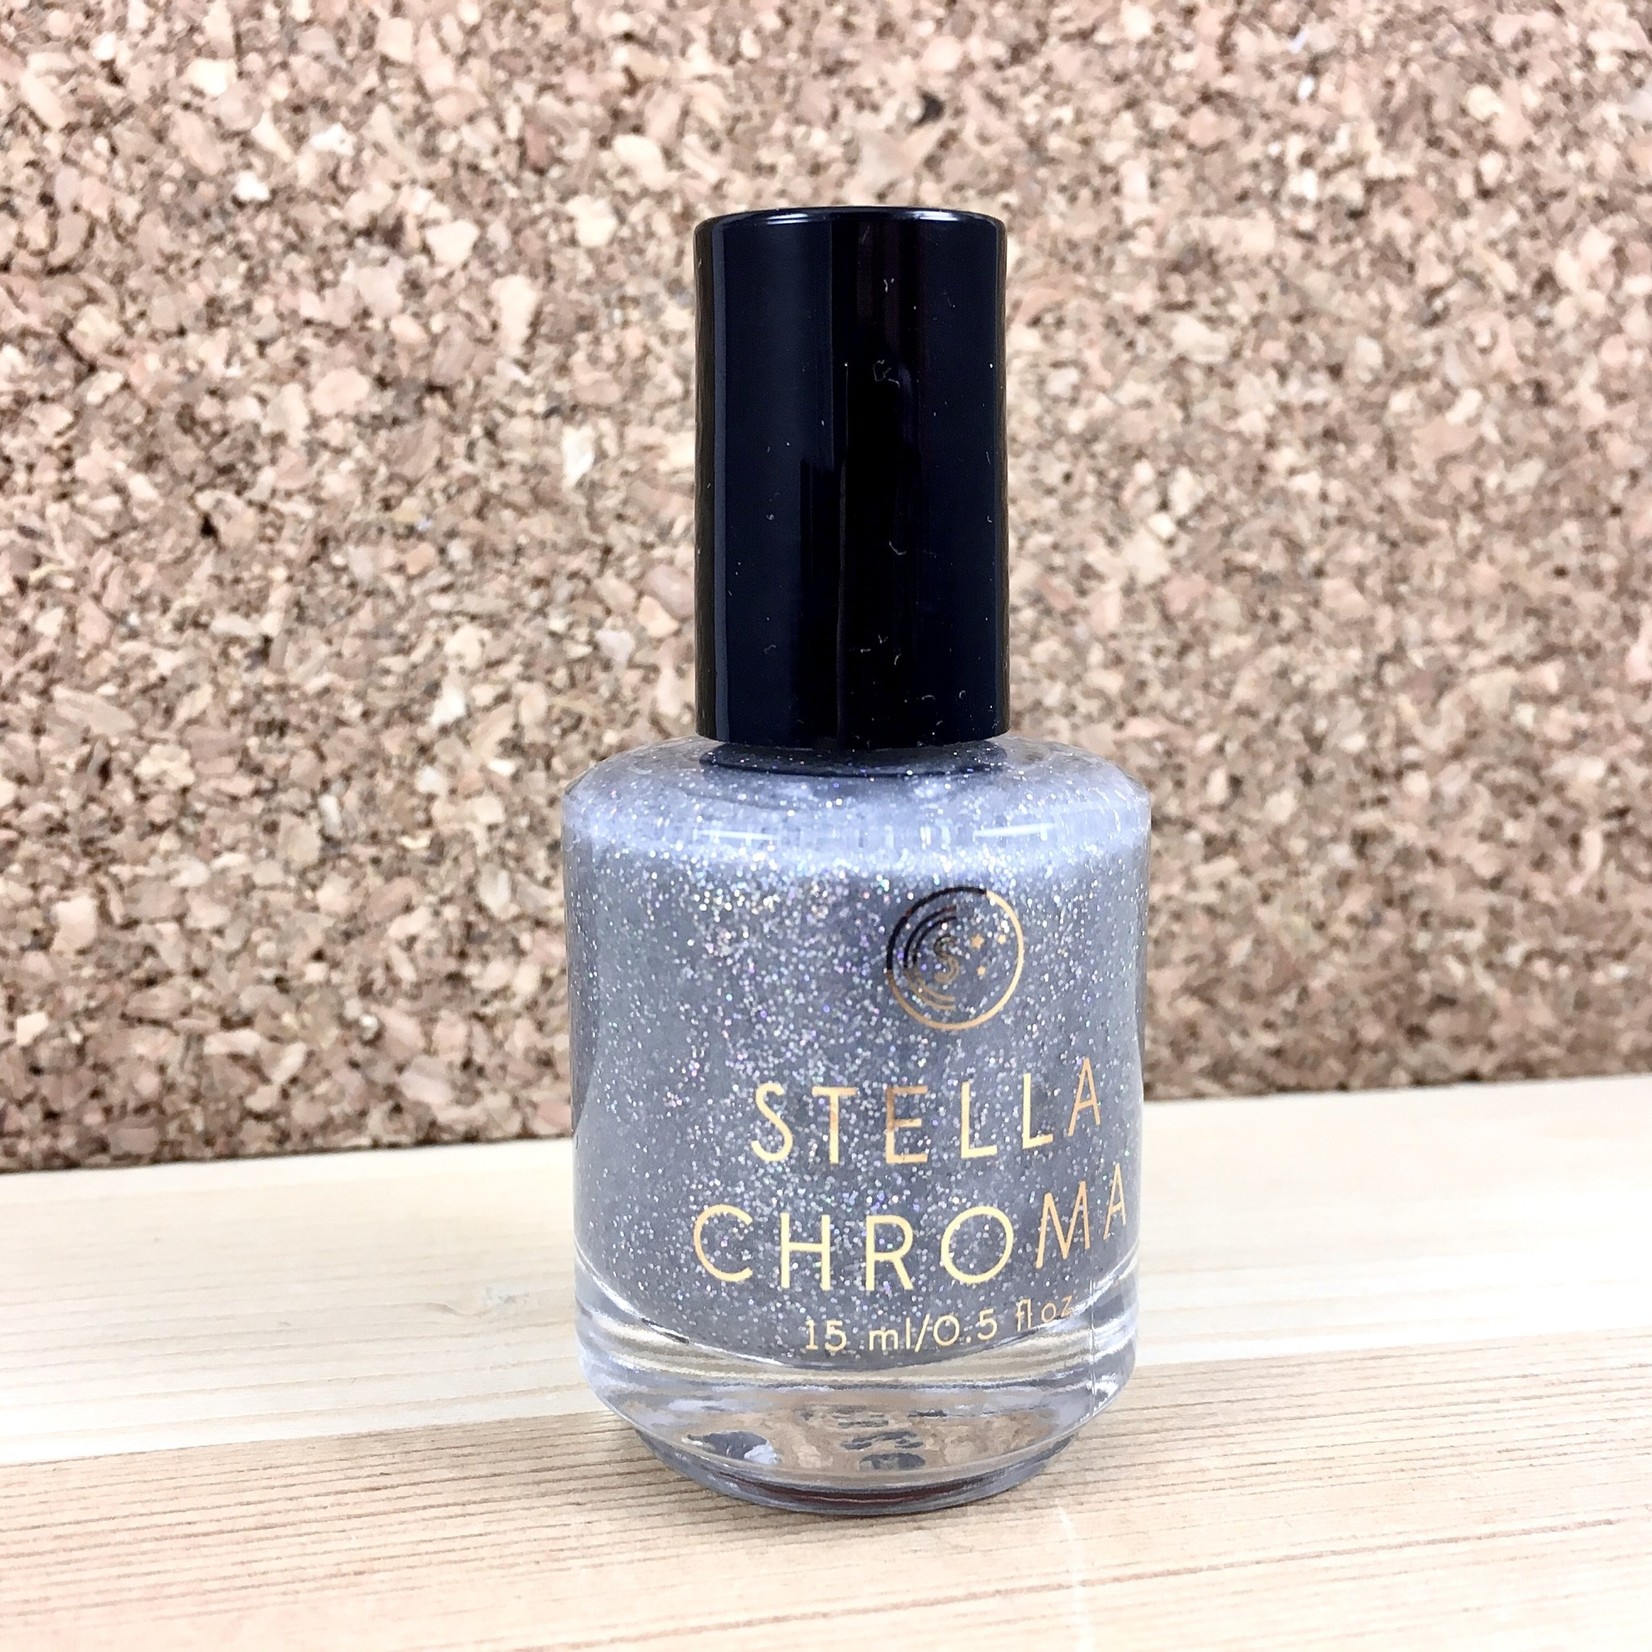 Paint Box Polish / Stella Chroma Silver Collection Nail Polish